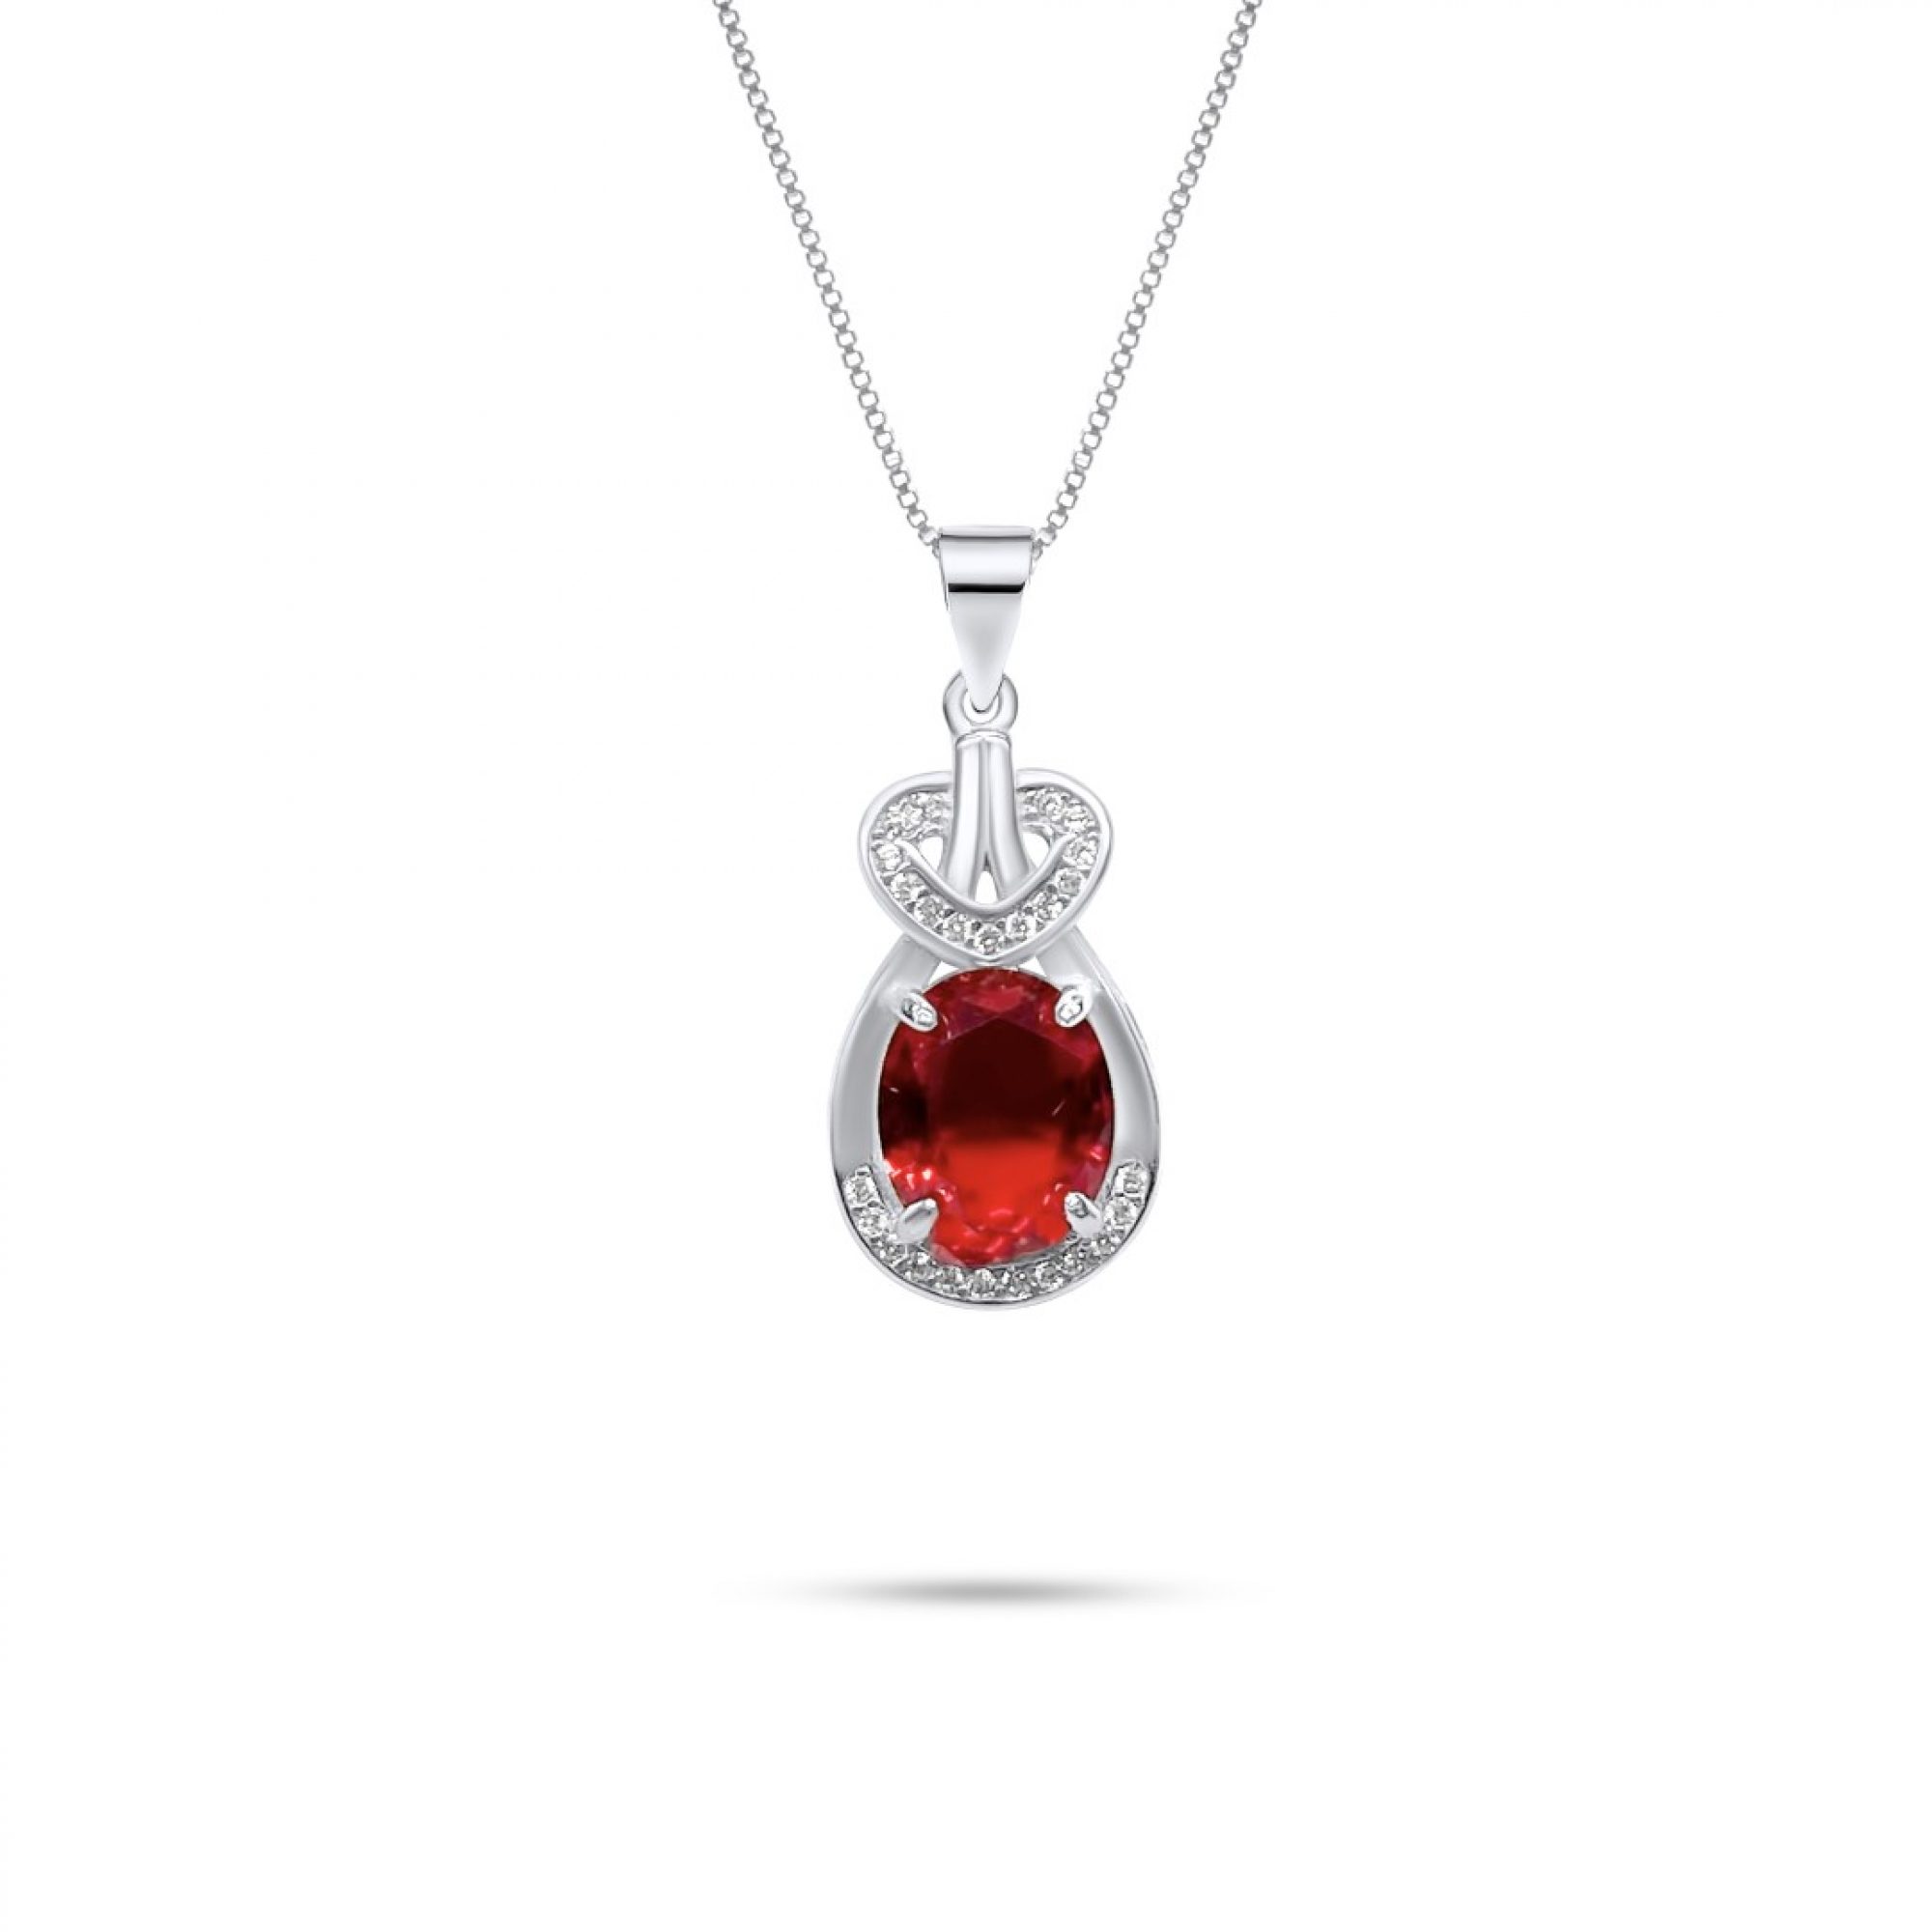 Necklace with ruby zircon stones